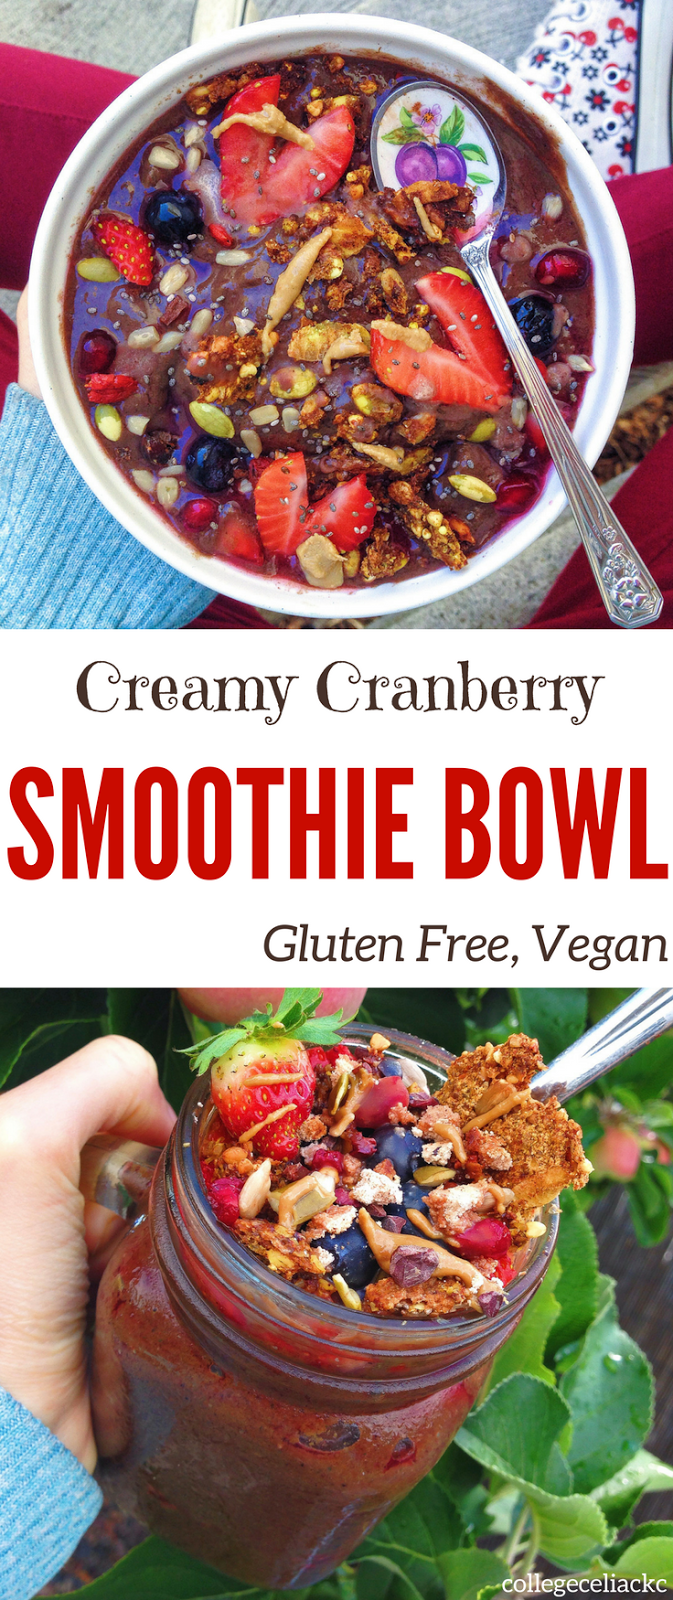 Creamy Cranberry Smoothie Bowl (Gluten Free, Vegan)